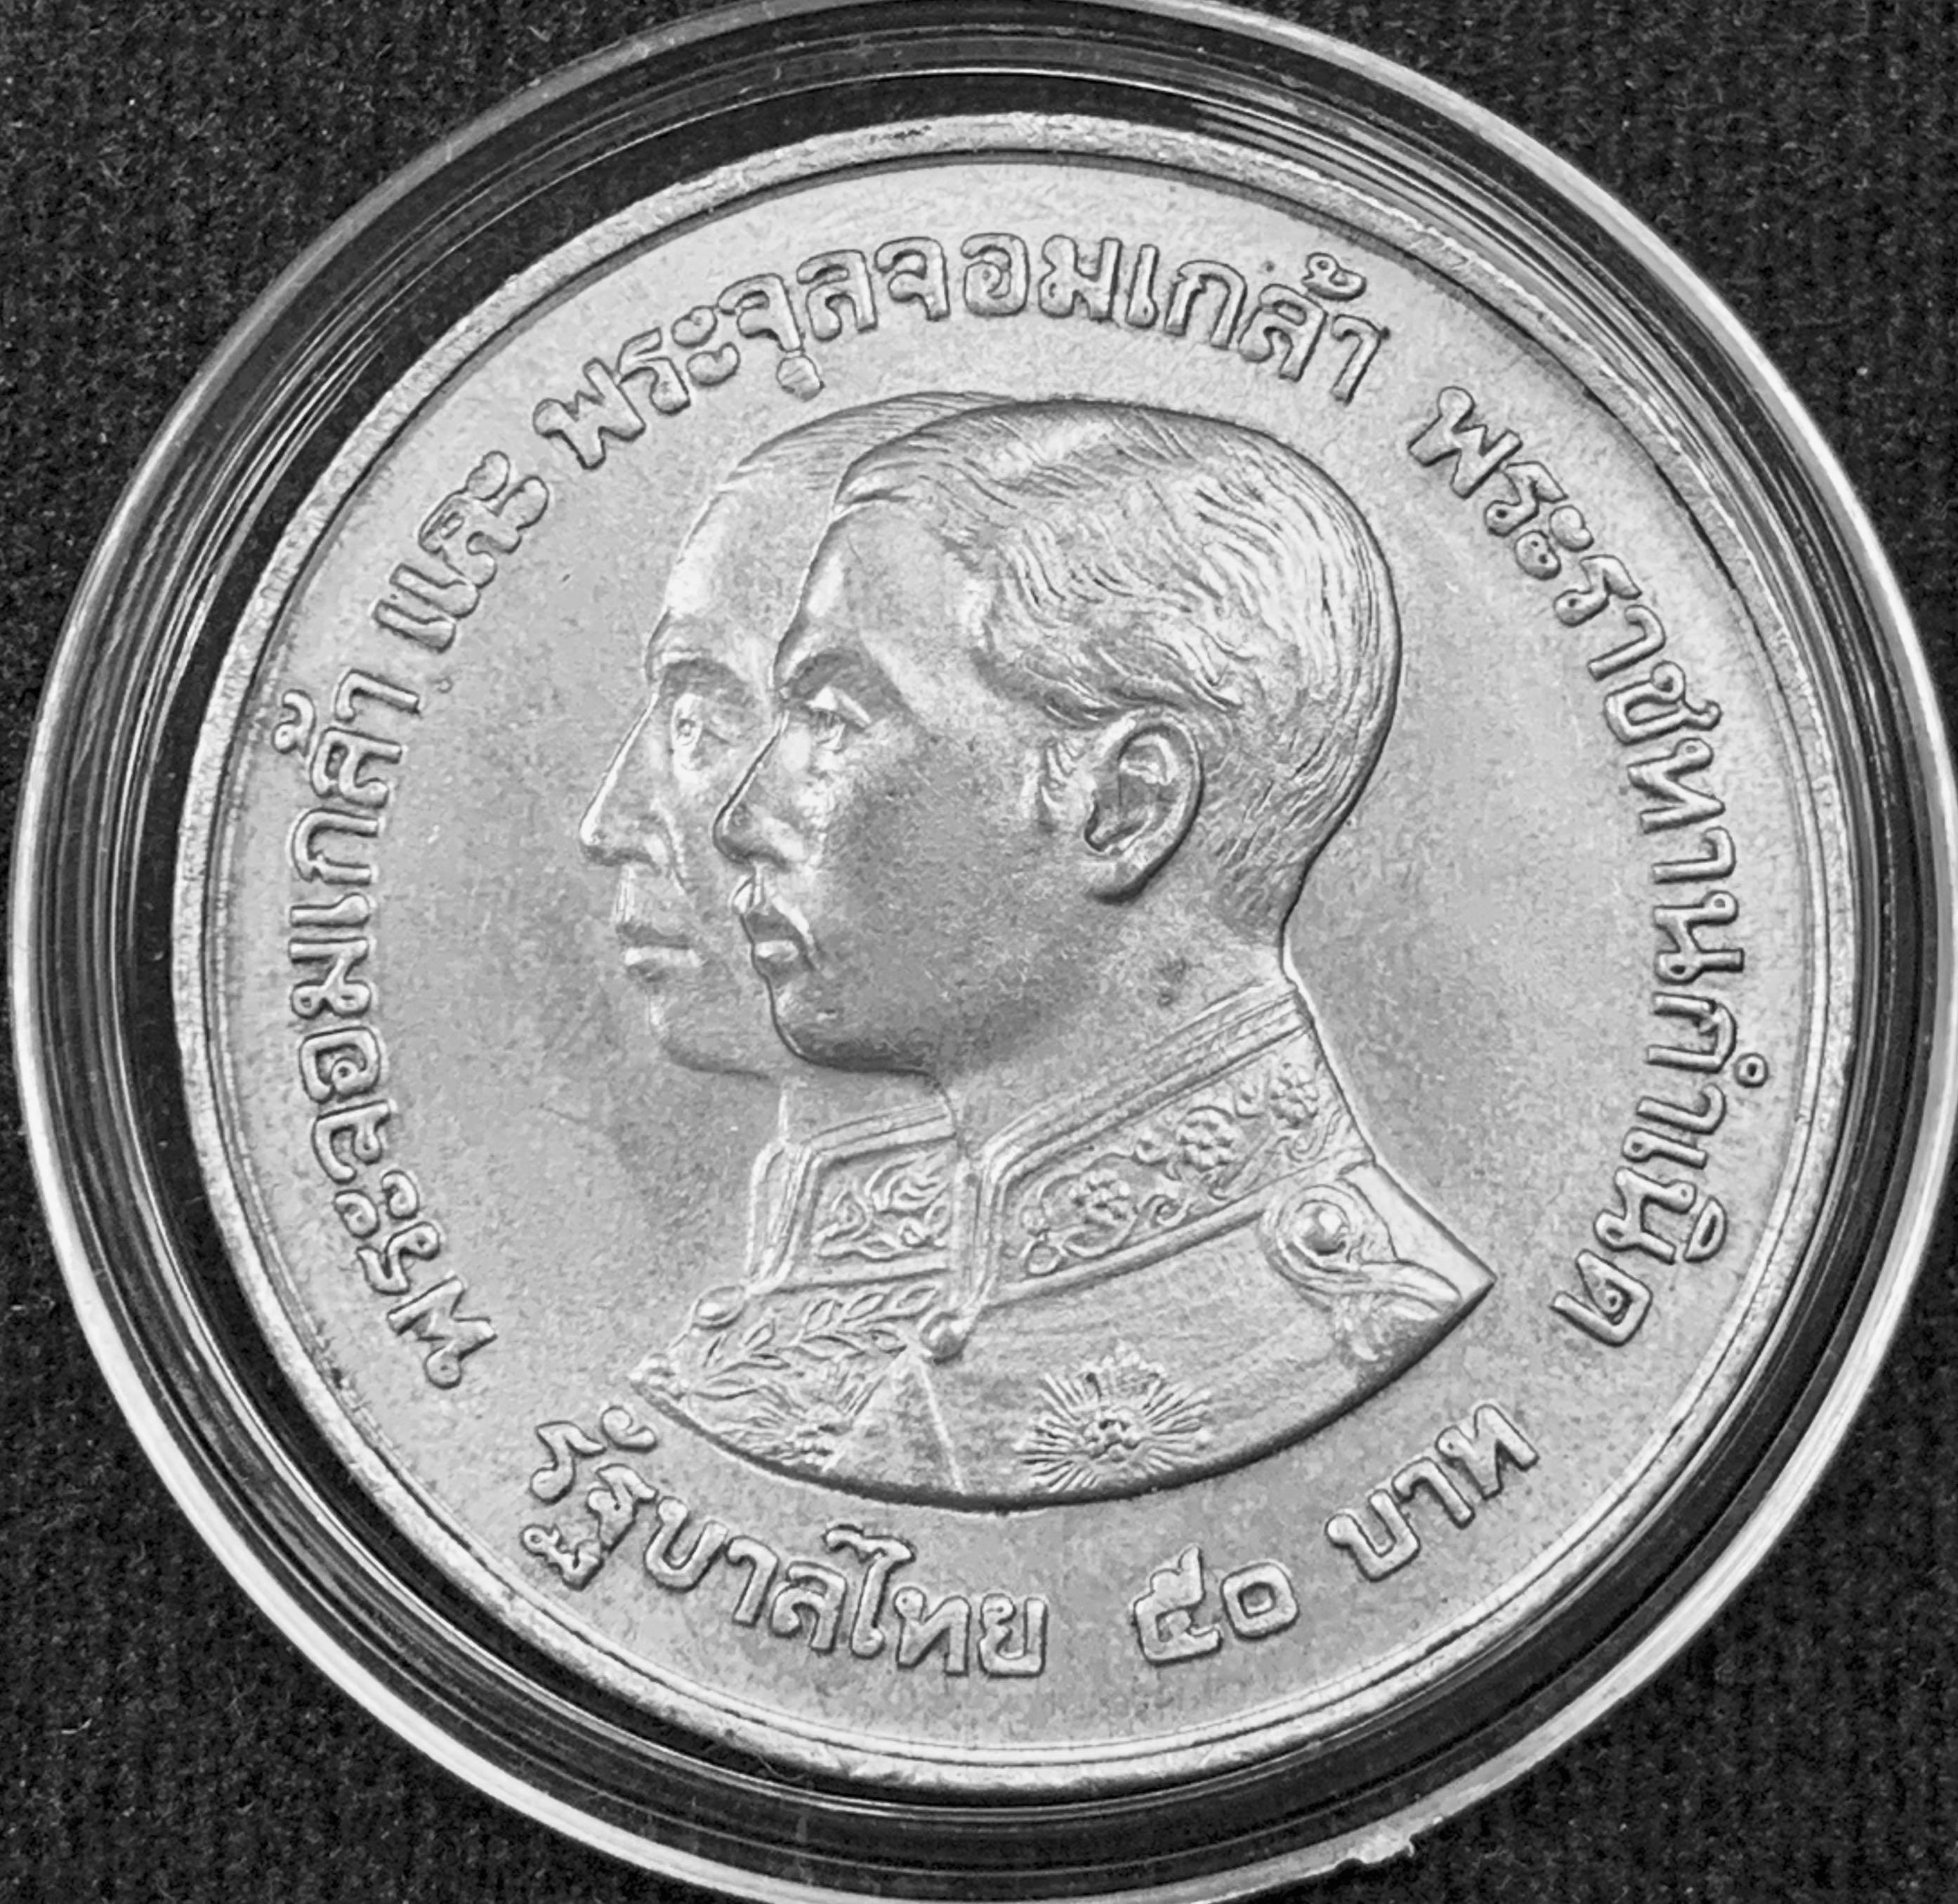 King Bhumibol Adulyadej Rama IX 70th Year Reign 50 Baht 2016 Thailand Coin w Box 